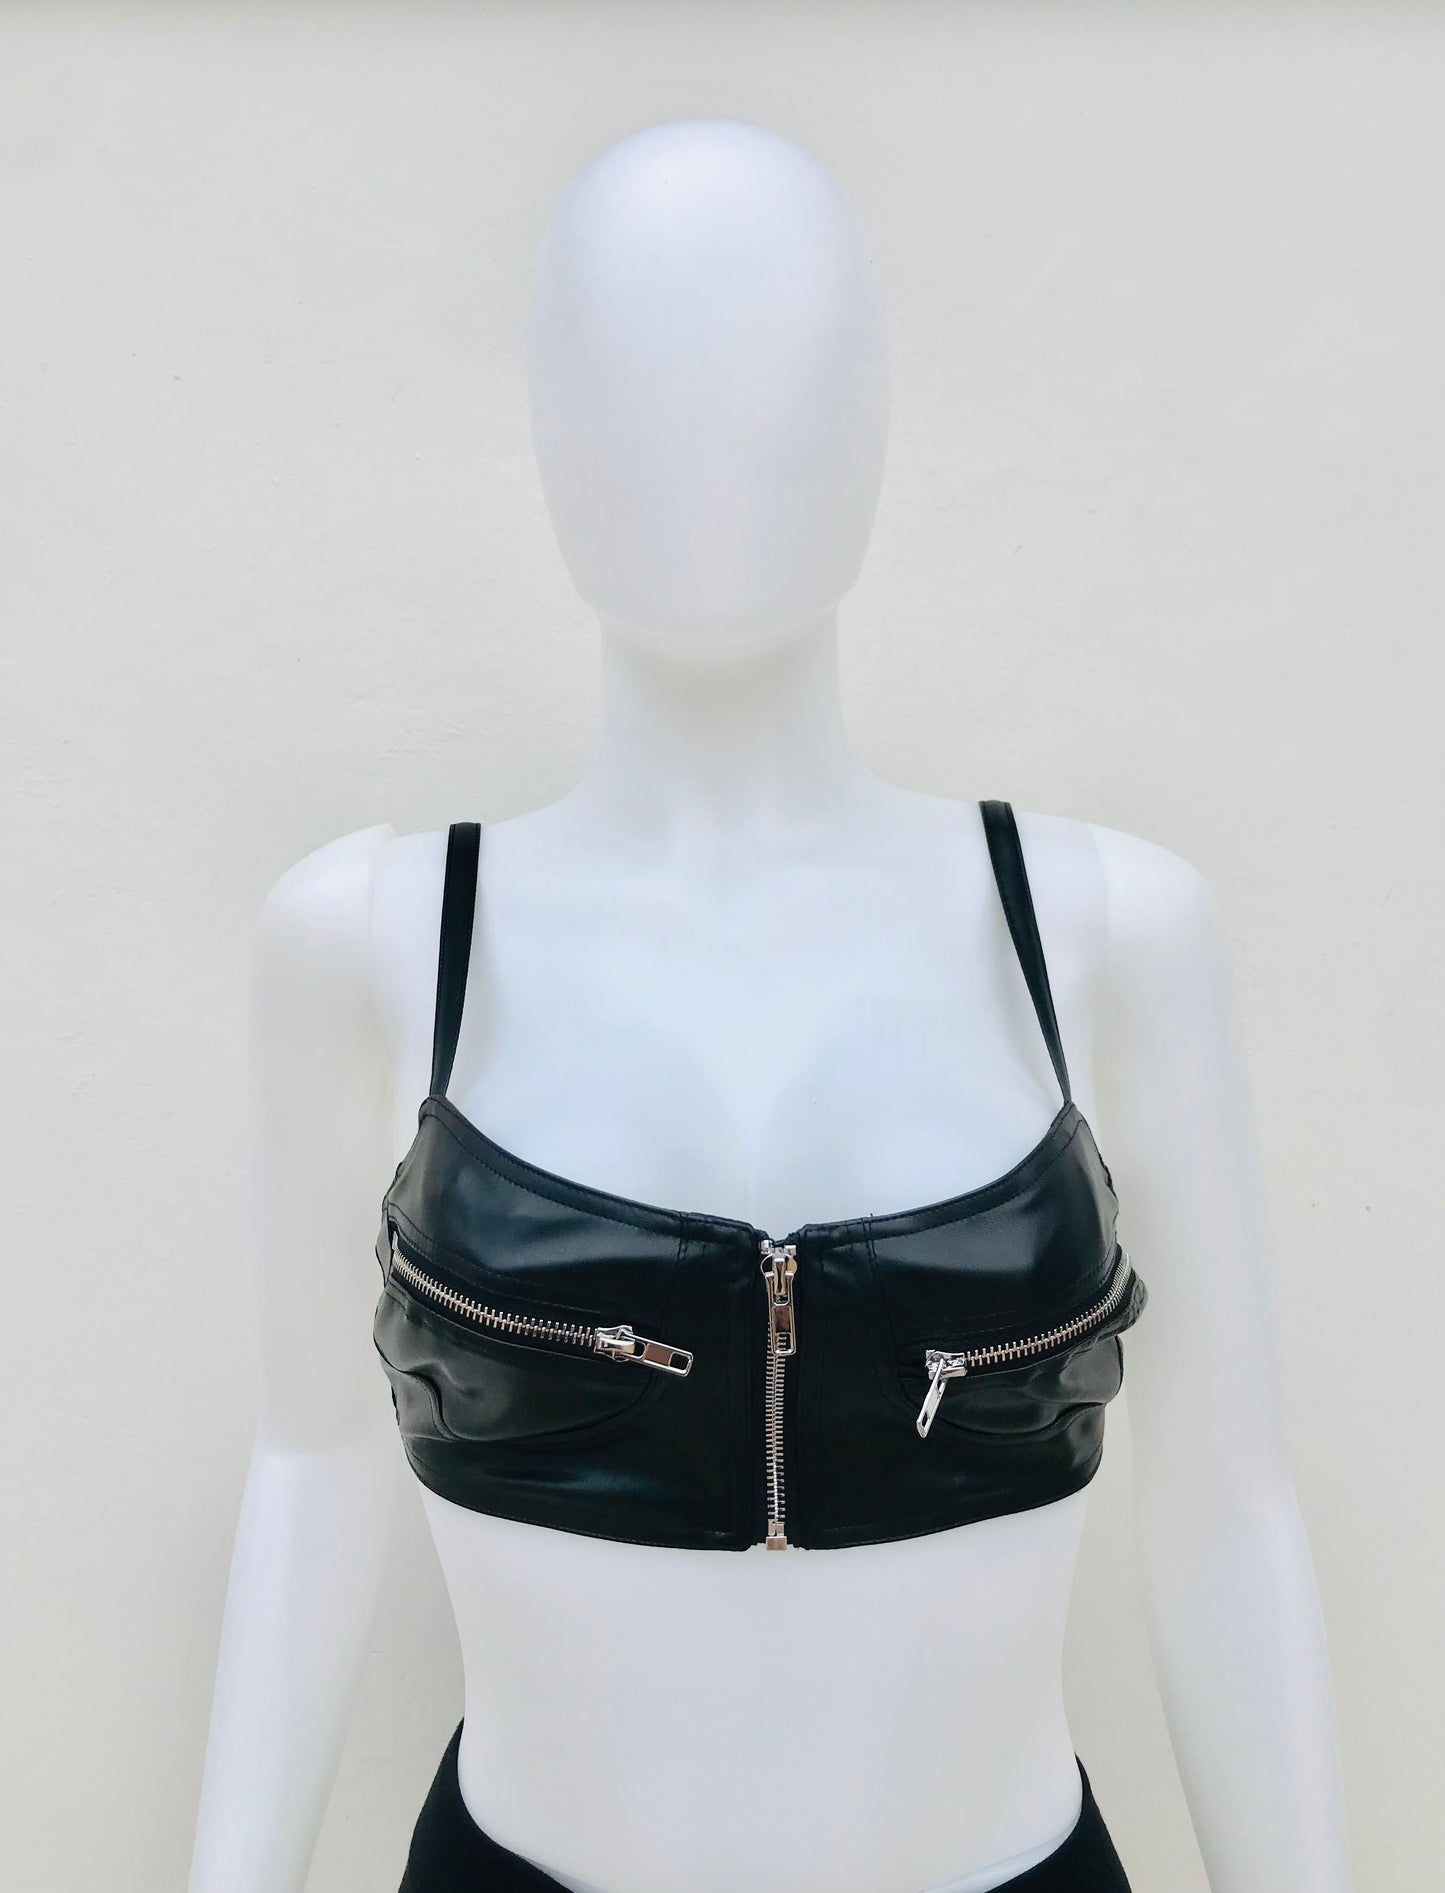 Top FASHION NOVA Original, estilo bra negro en leather con zippers plateados.